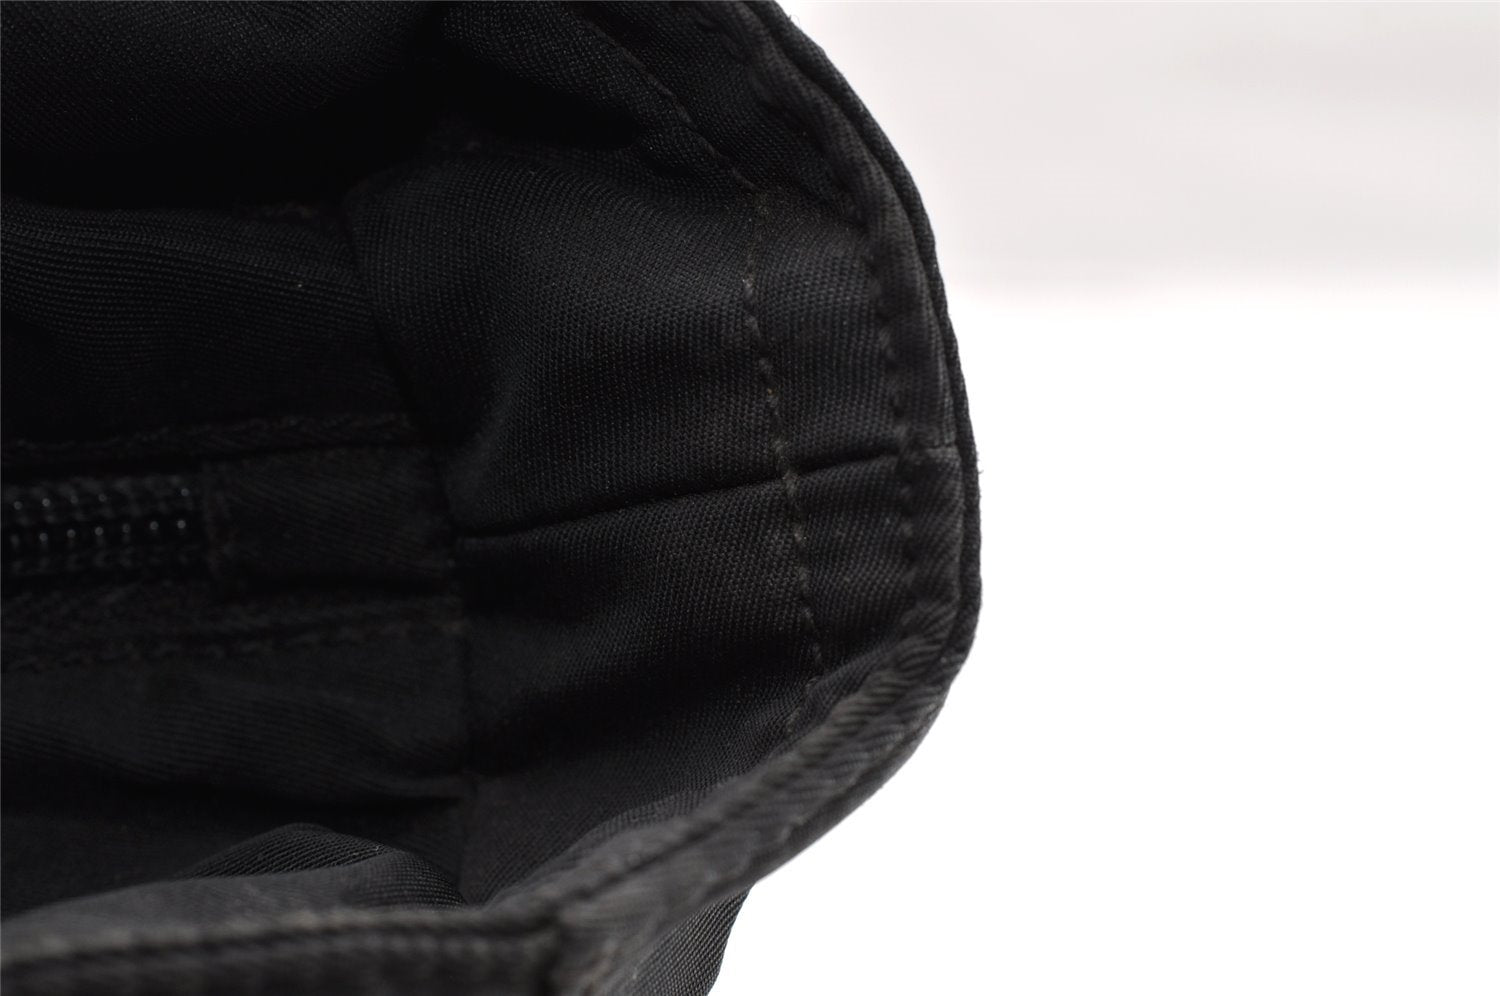 Authentic PRADA Vintage Nylon Tessuto Shoulder Tote Bag Black 5512I